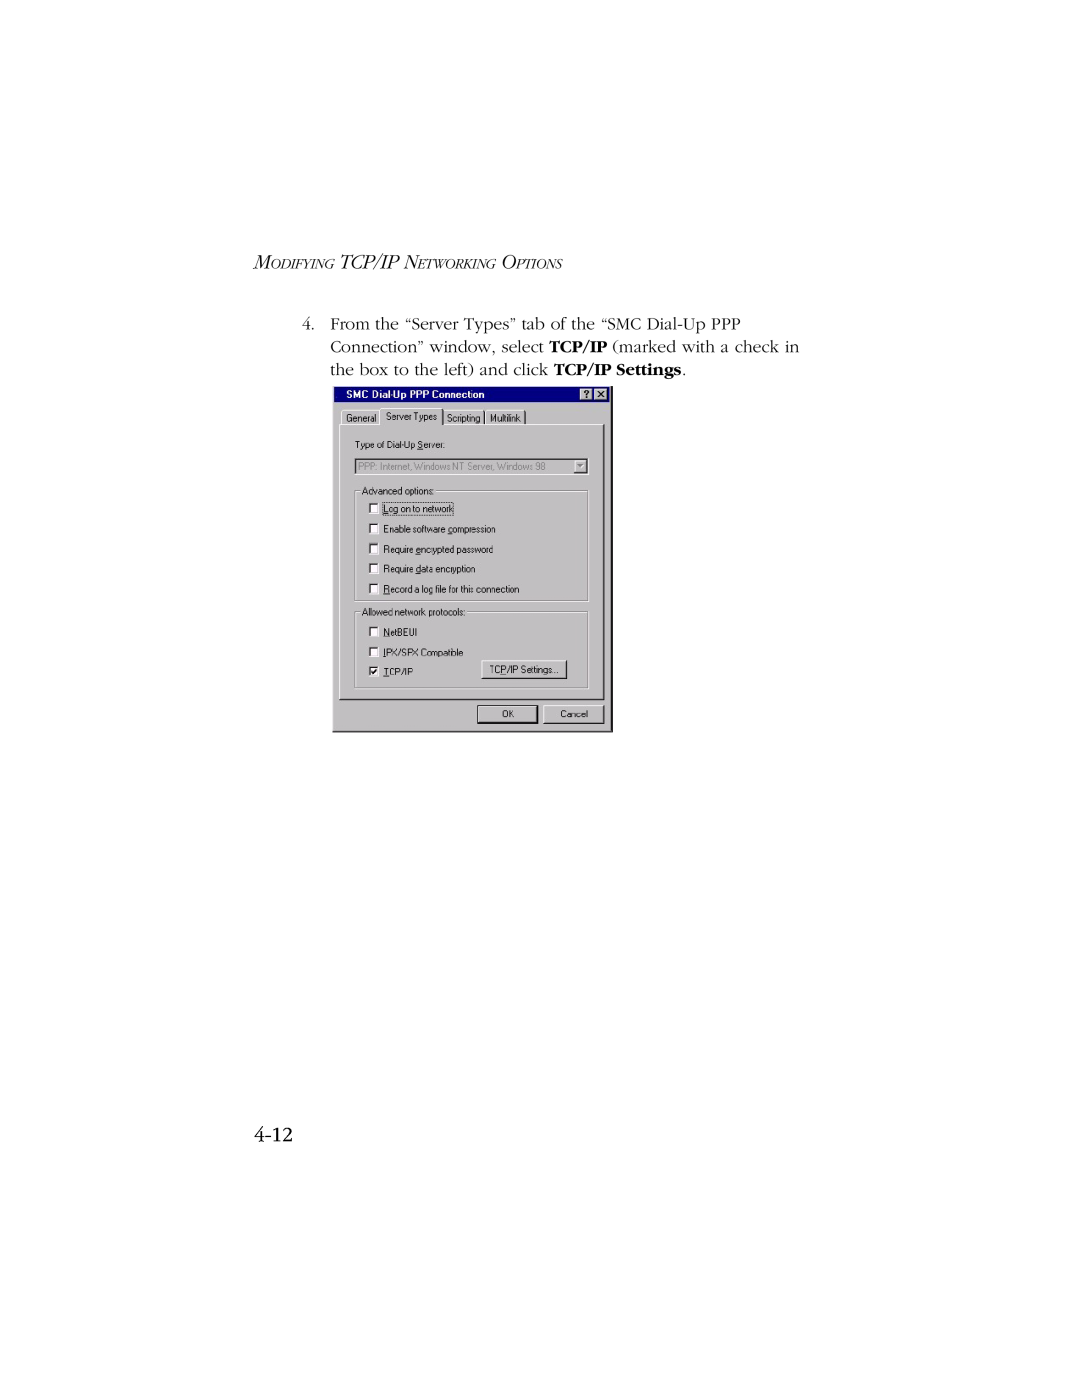 SMC Networks SMC7003-USB manual 4-12, Modifying Tcp/Ip Networking Options 